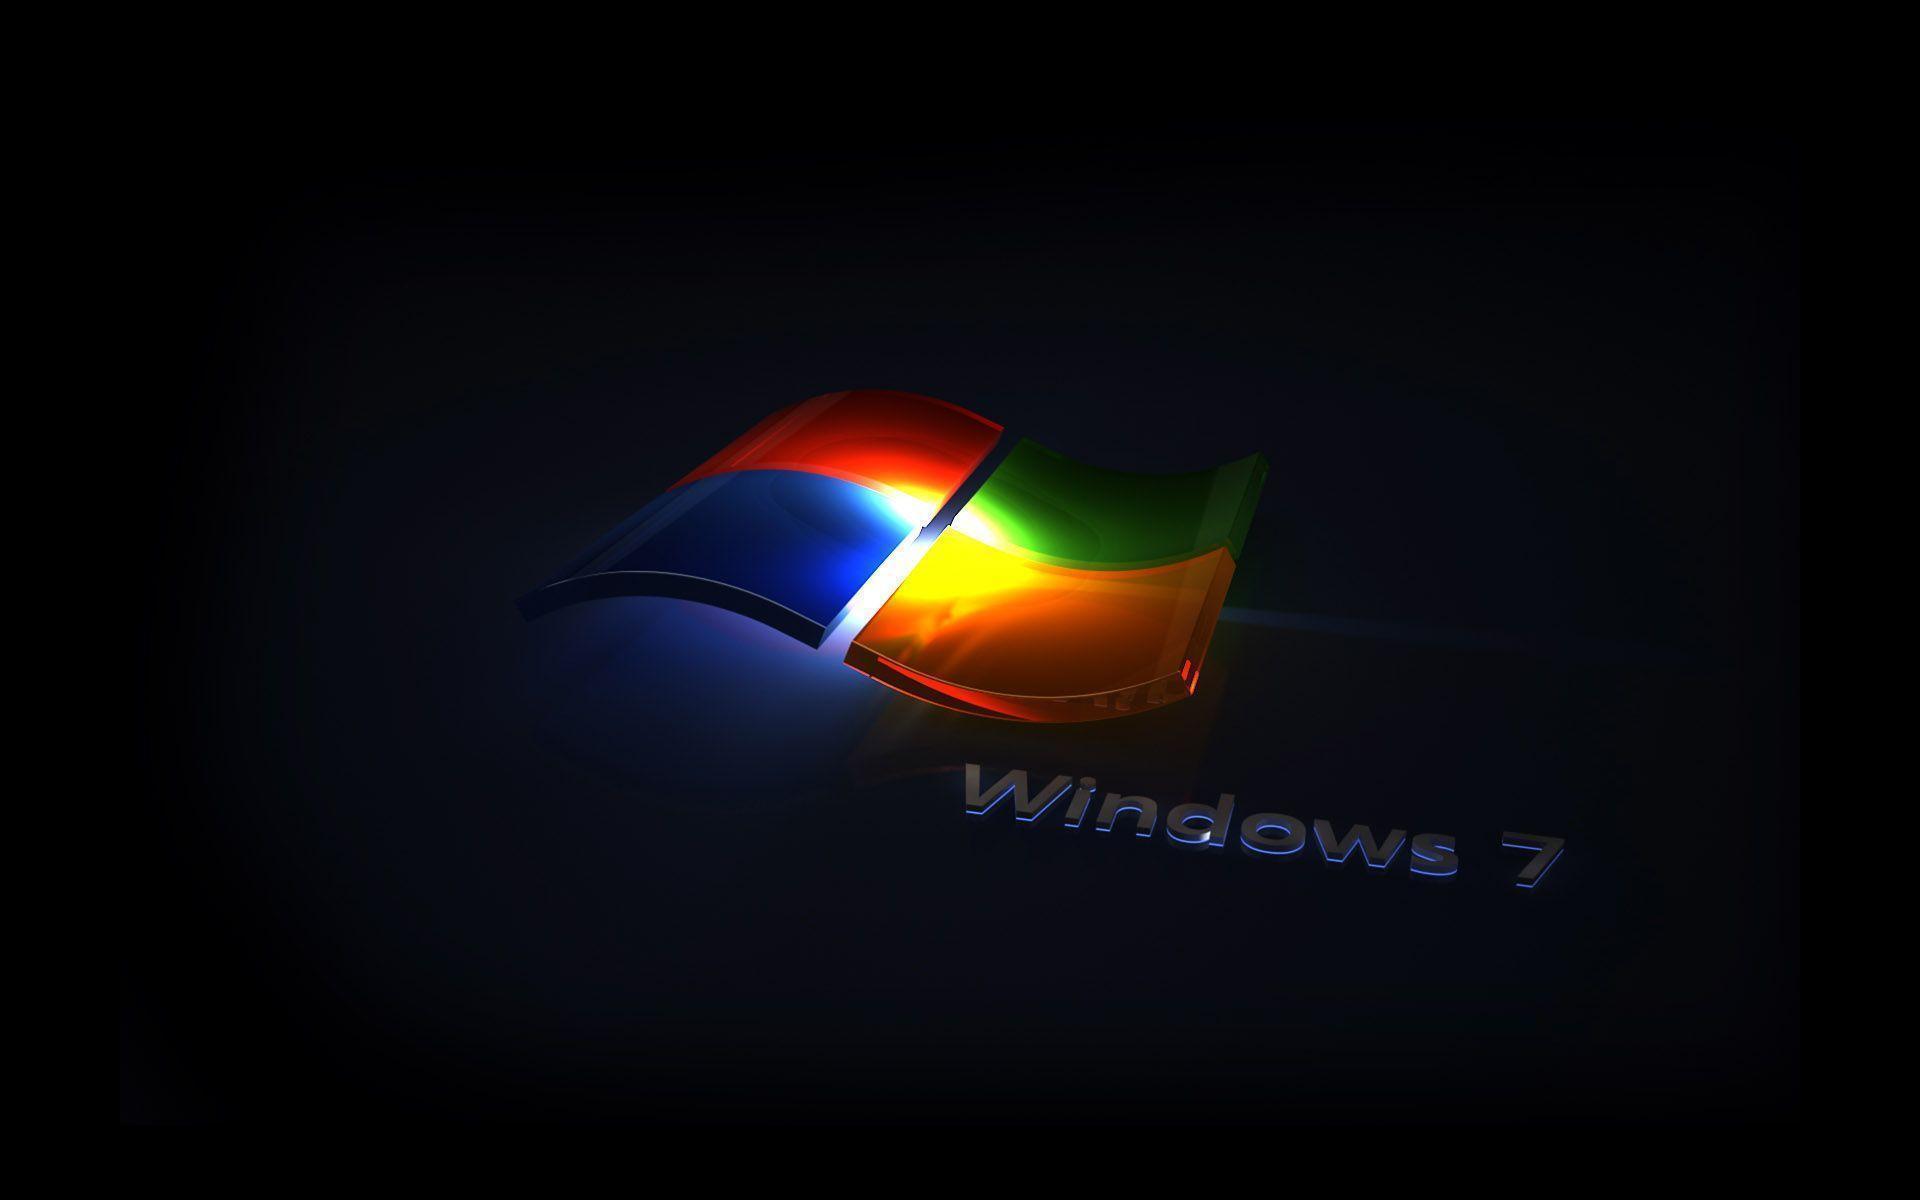 Wallpaper Windows 7 Ultimate Hd 3d Keren Image Num 40